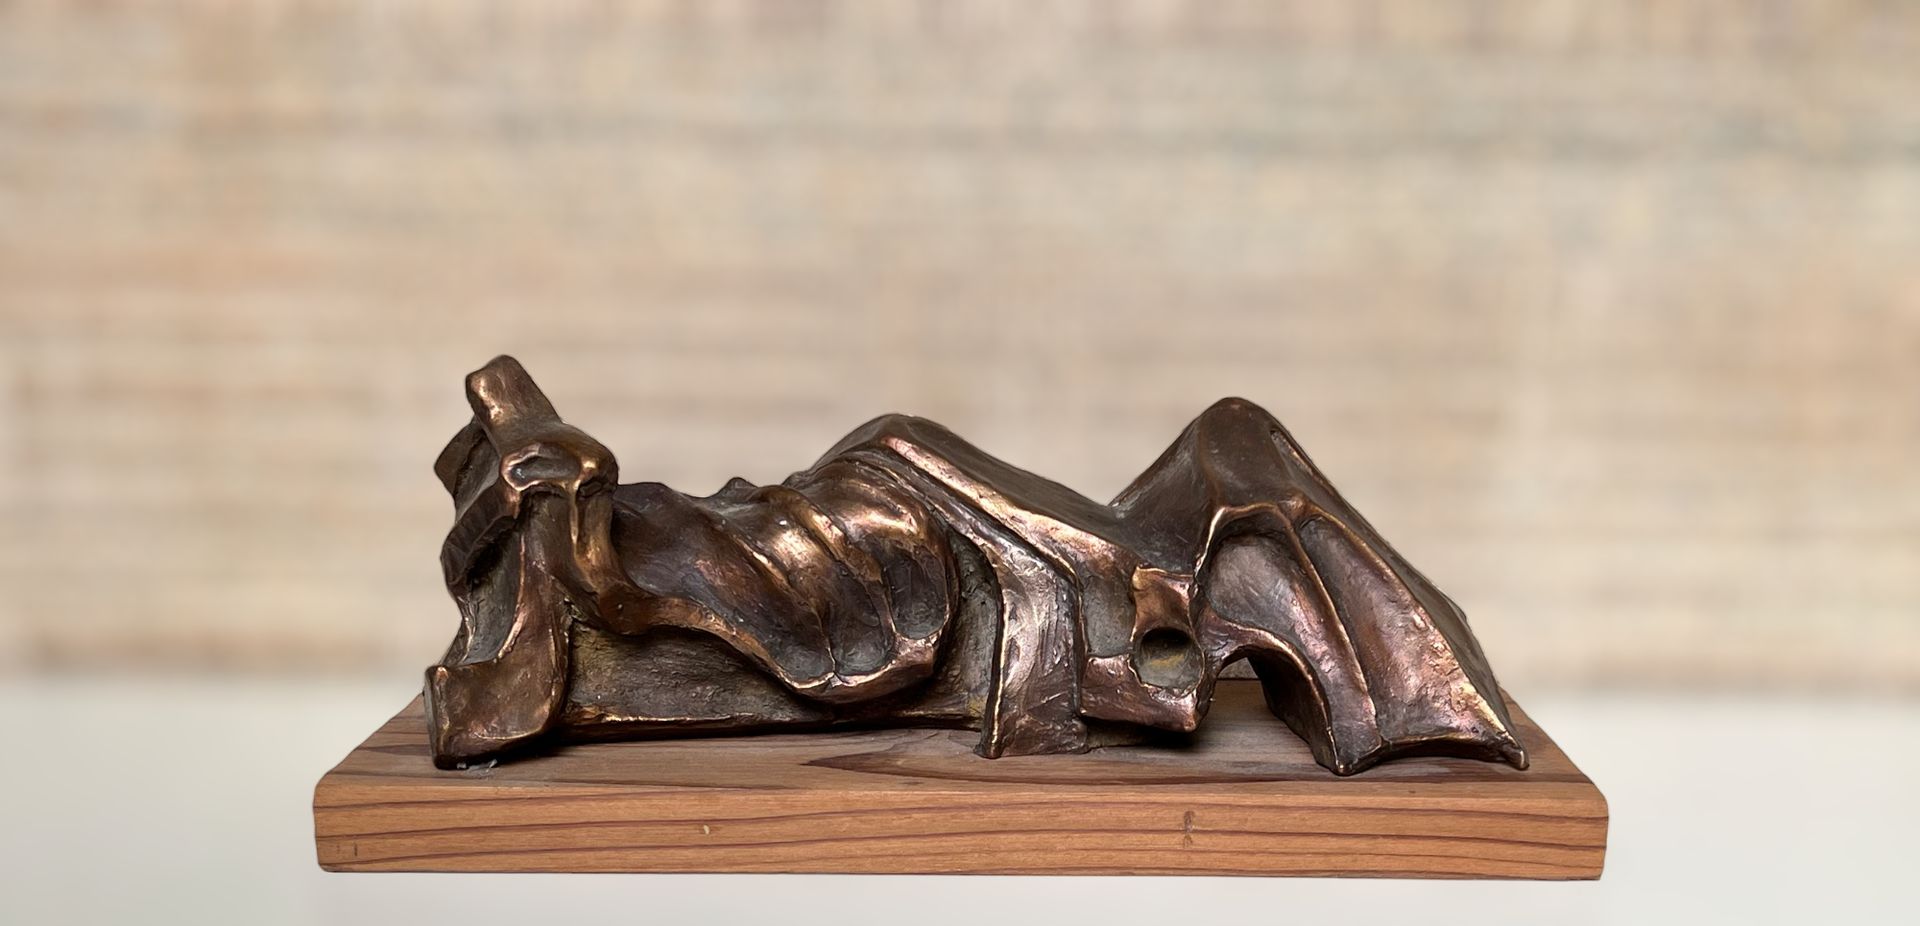 Null Christian ODDOUX (1947-2022), "Le rêveur", 抛光青铜, 2000, 高: 10 cm, 宽: 30 cm

&hellip;